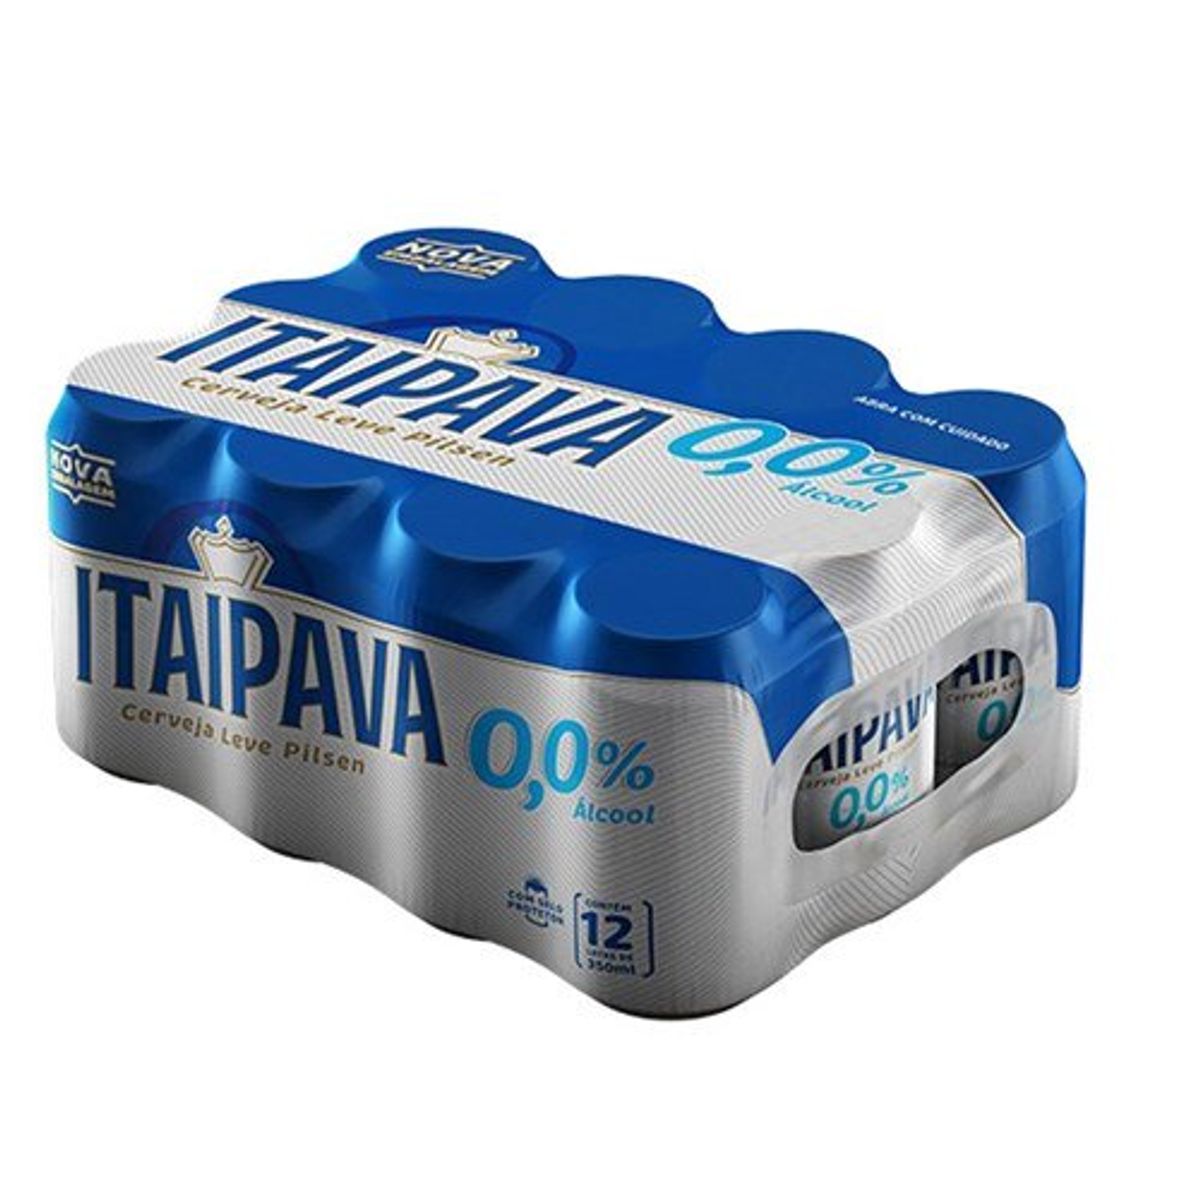 Cerveja Pilsen Zero Álcool Itaipava Lata 350ml (Pack com 12 und)